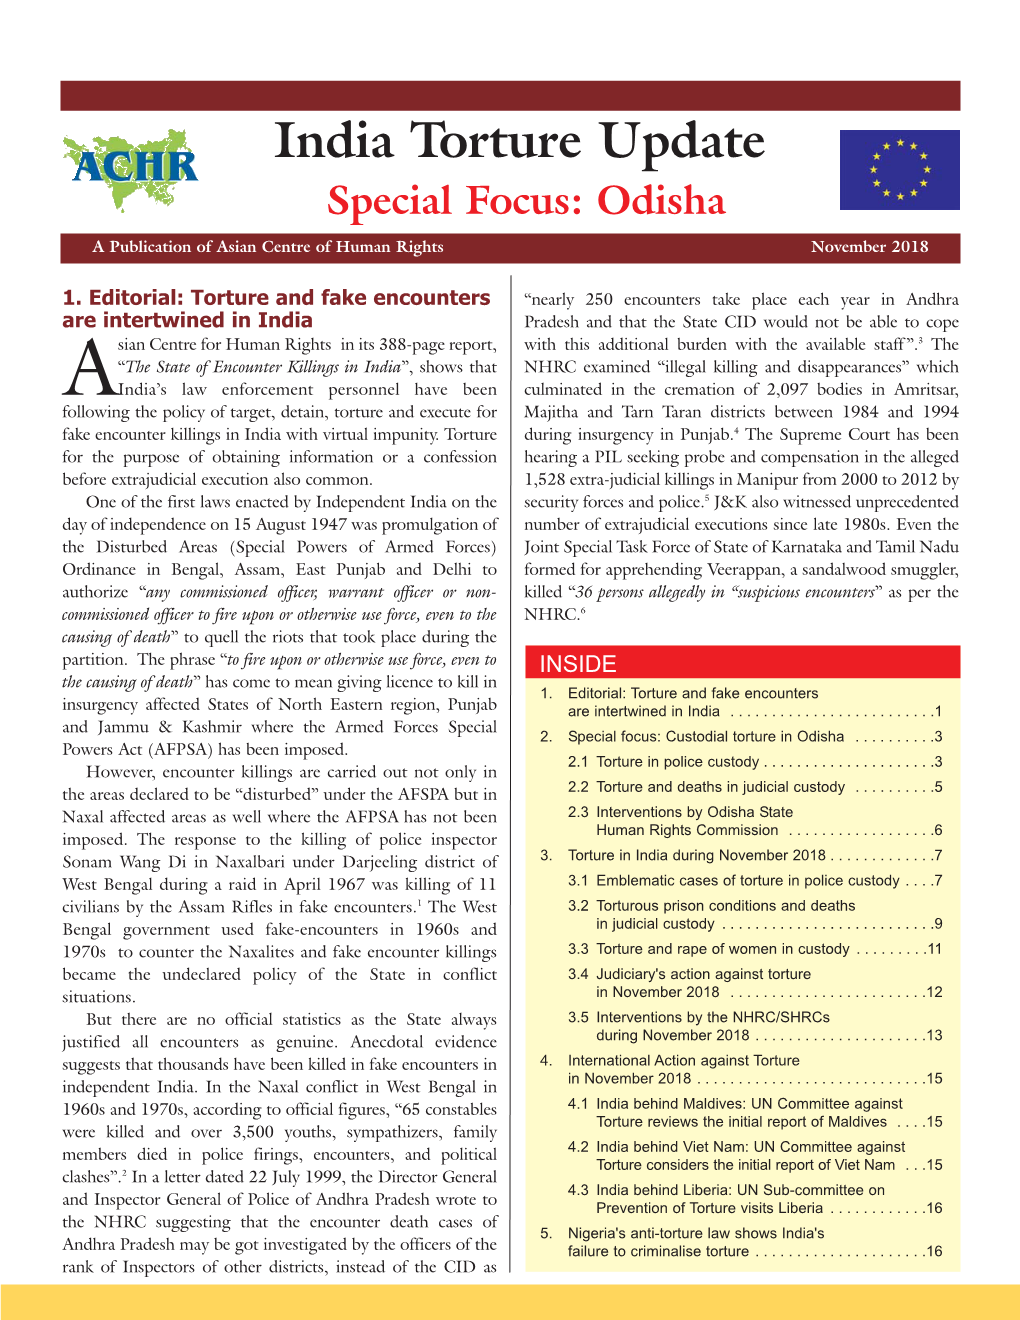 Odisha Newsletter November 18